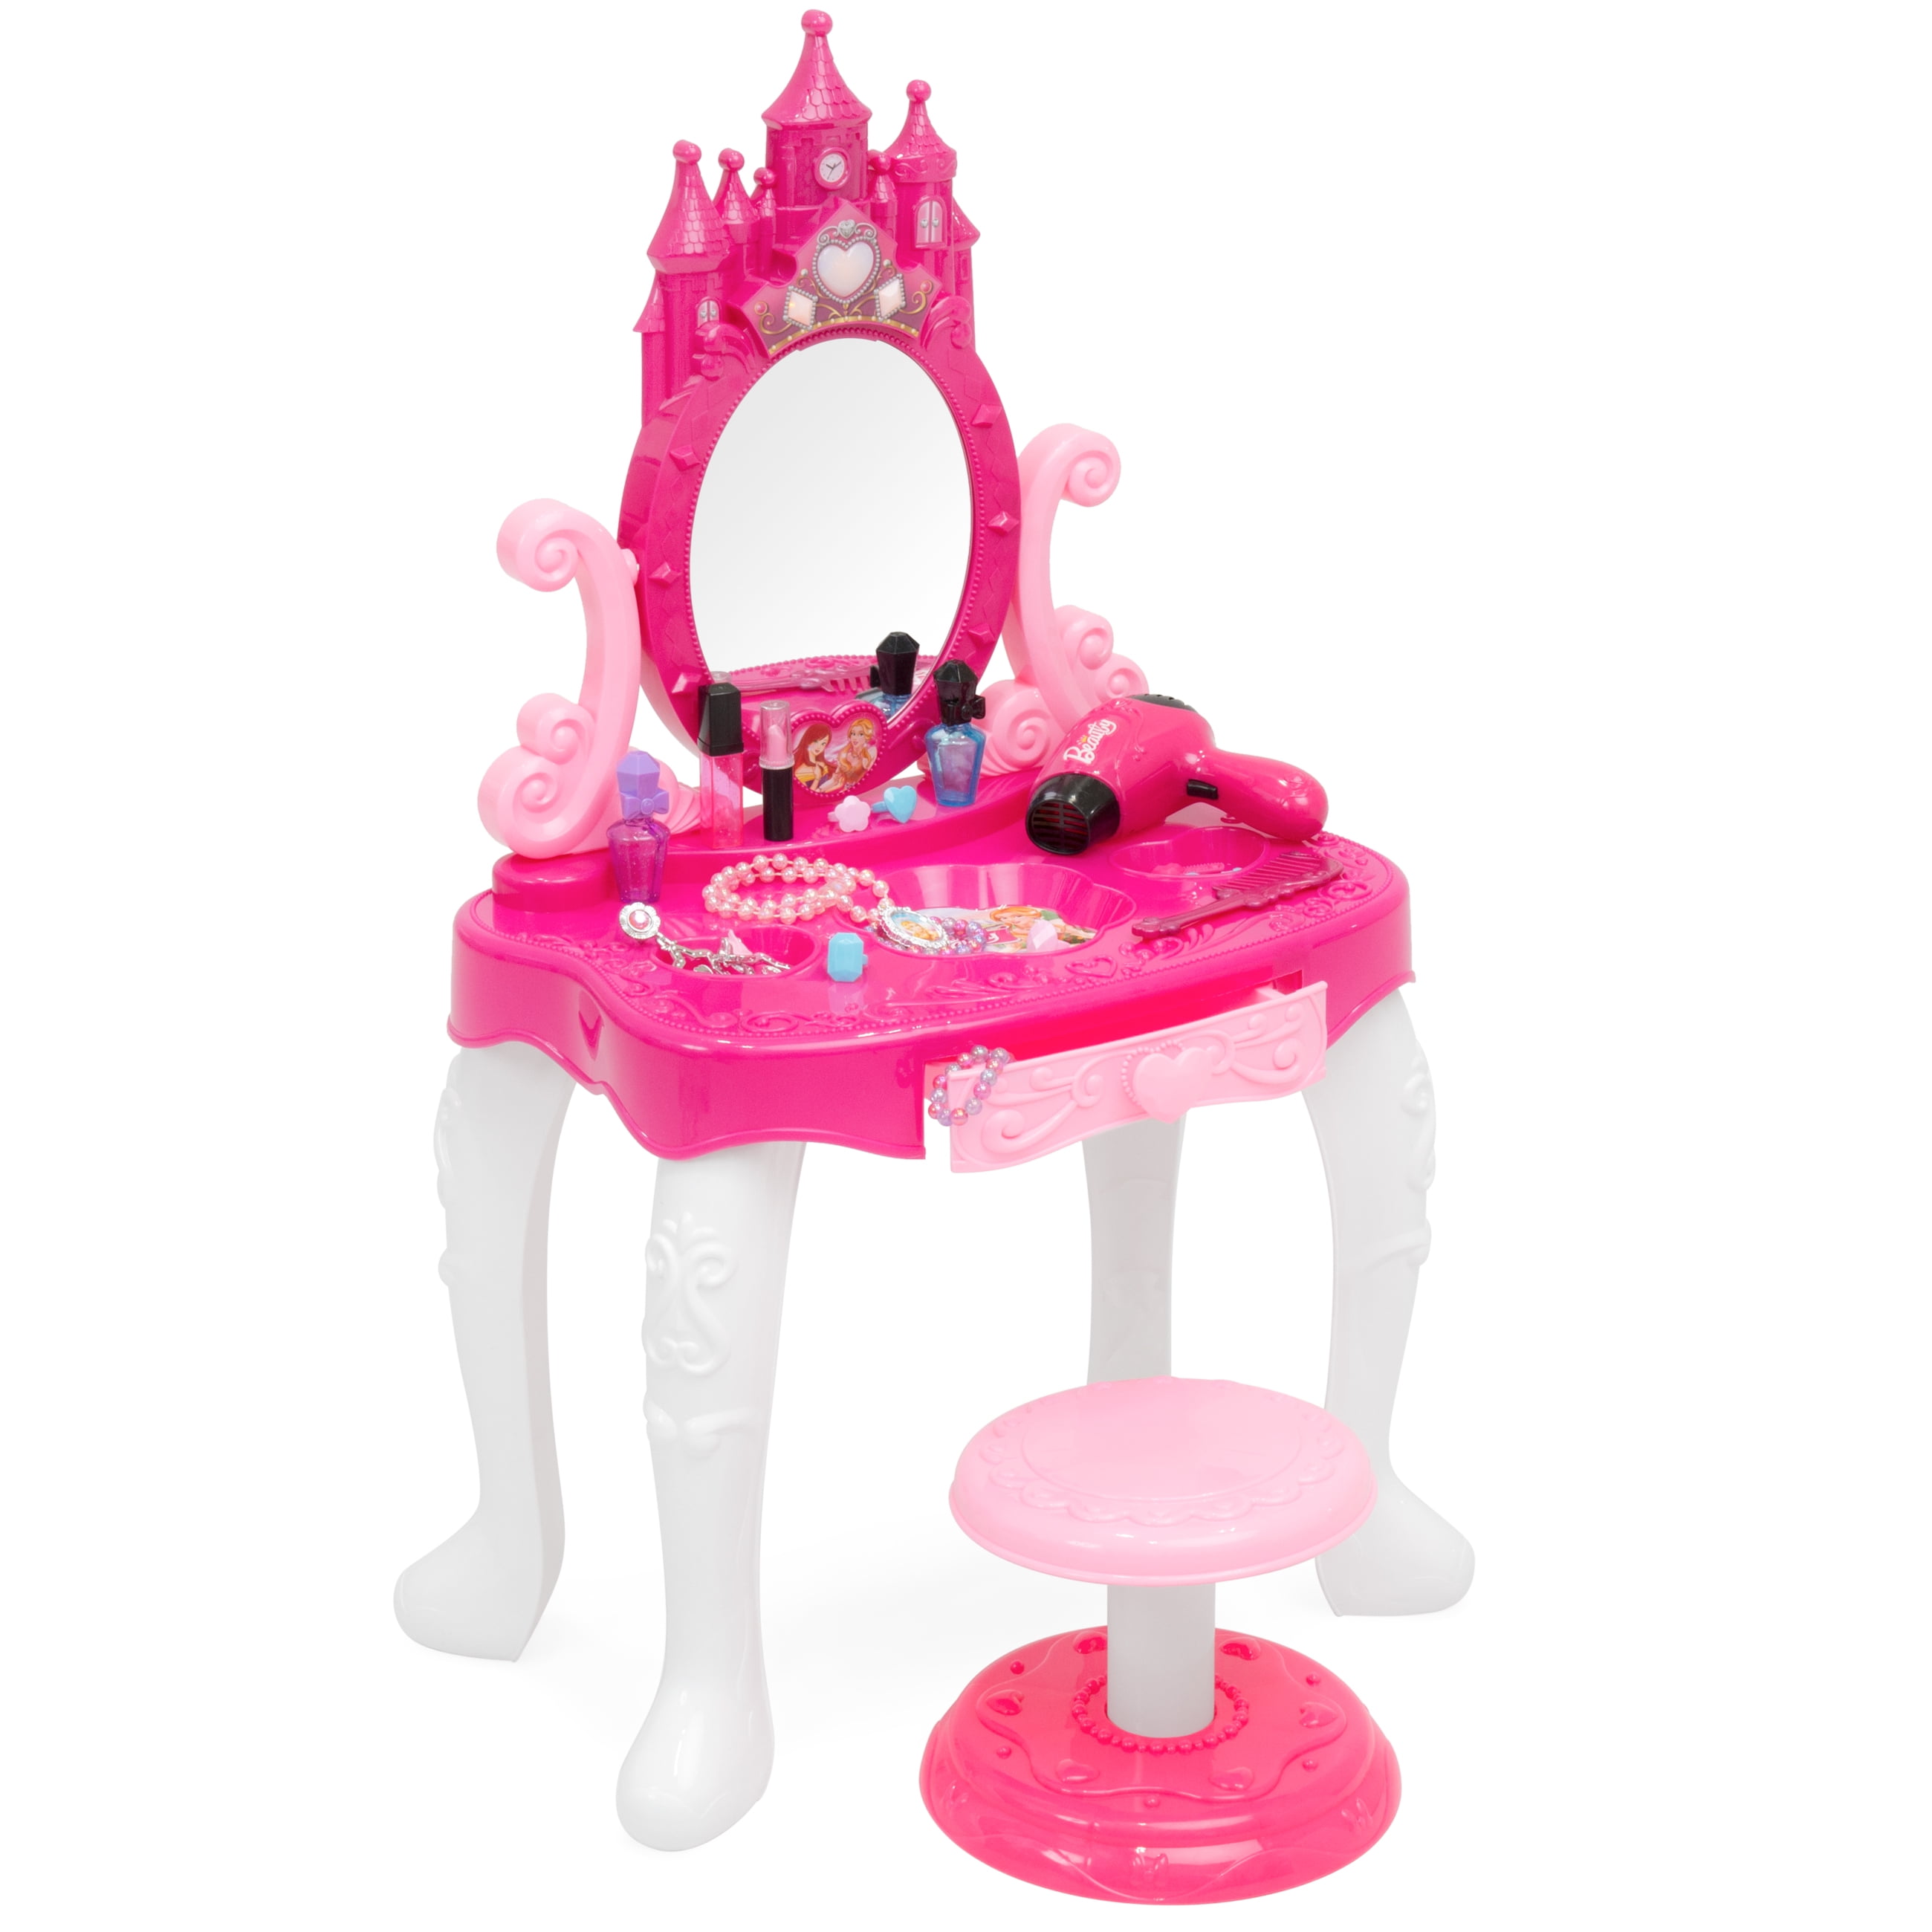 vanity table for kids